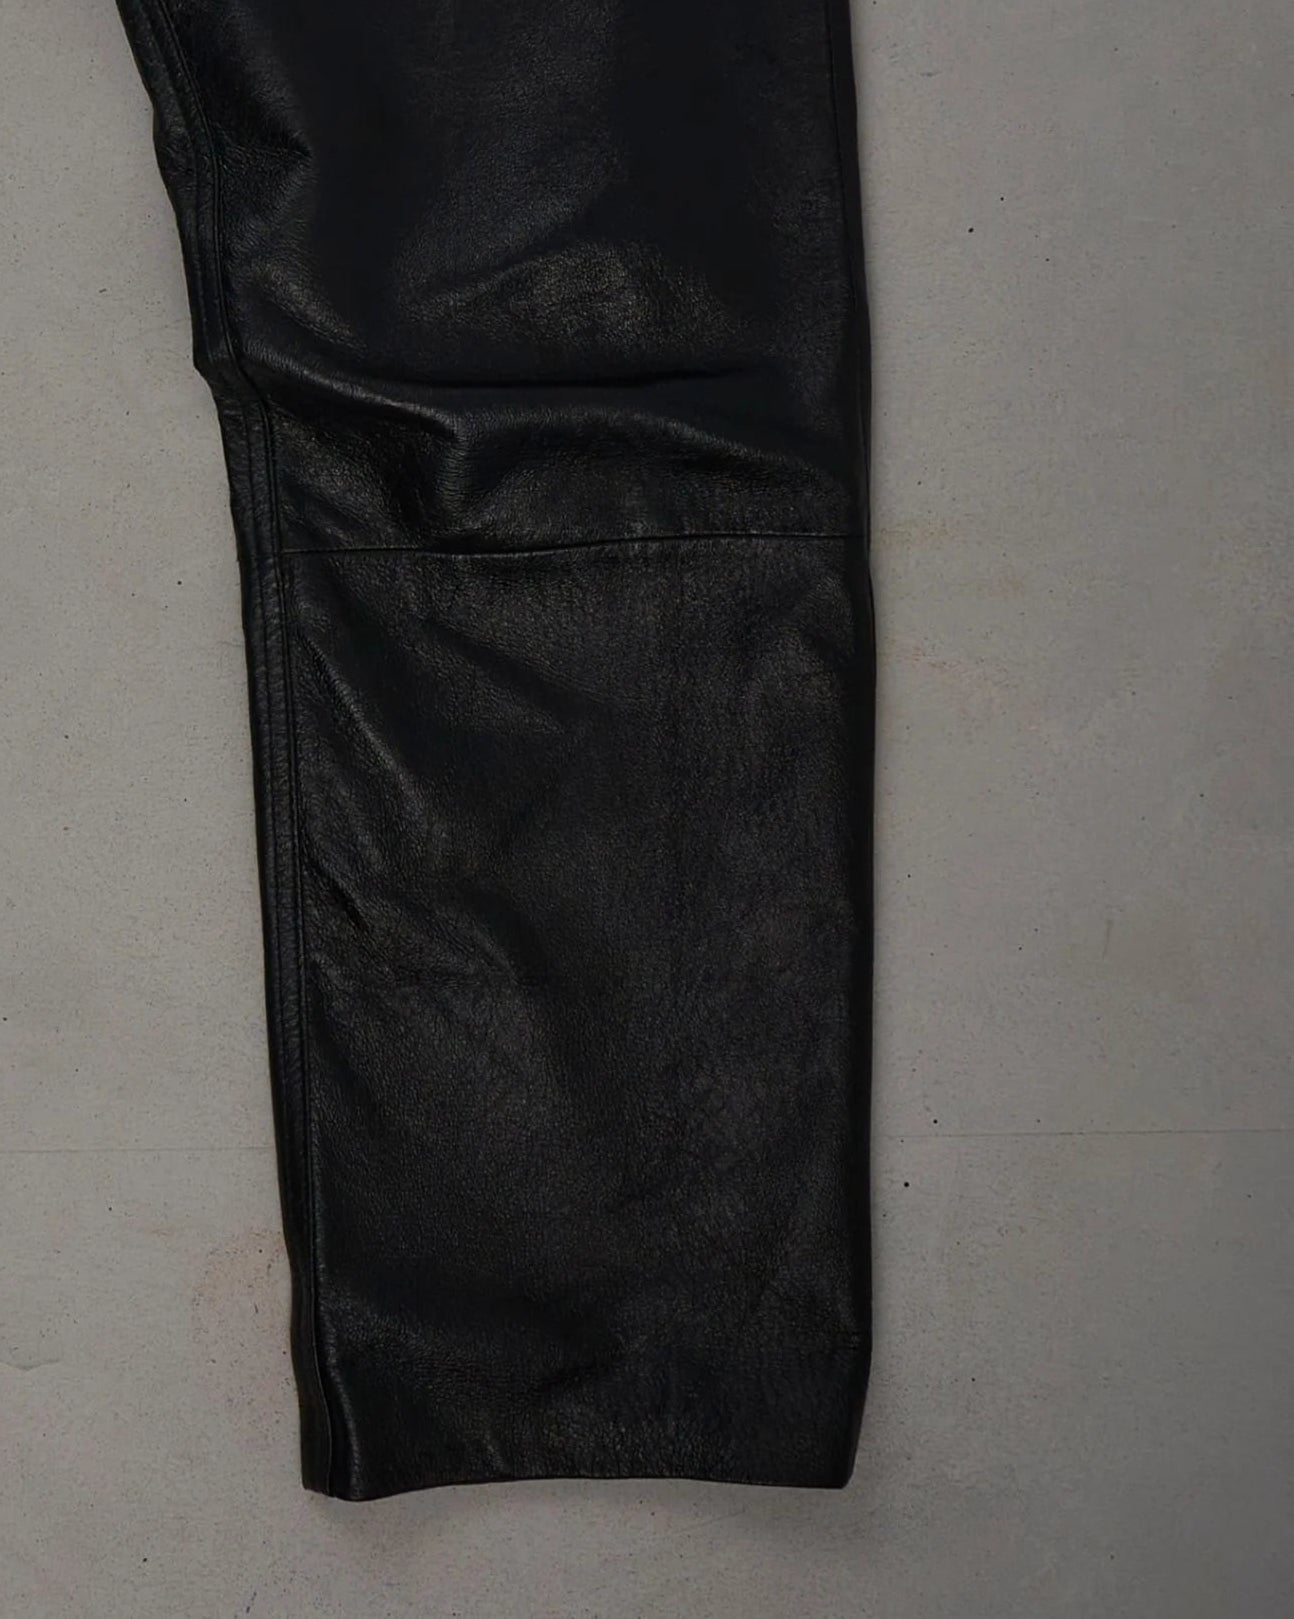 Vintage black leather pants